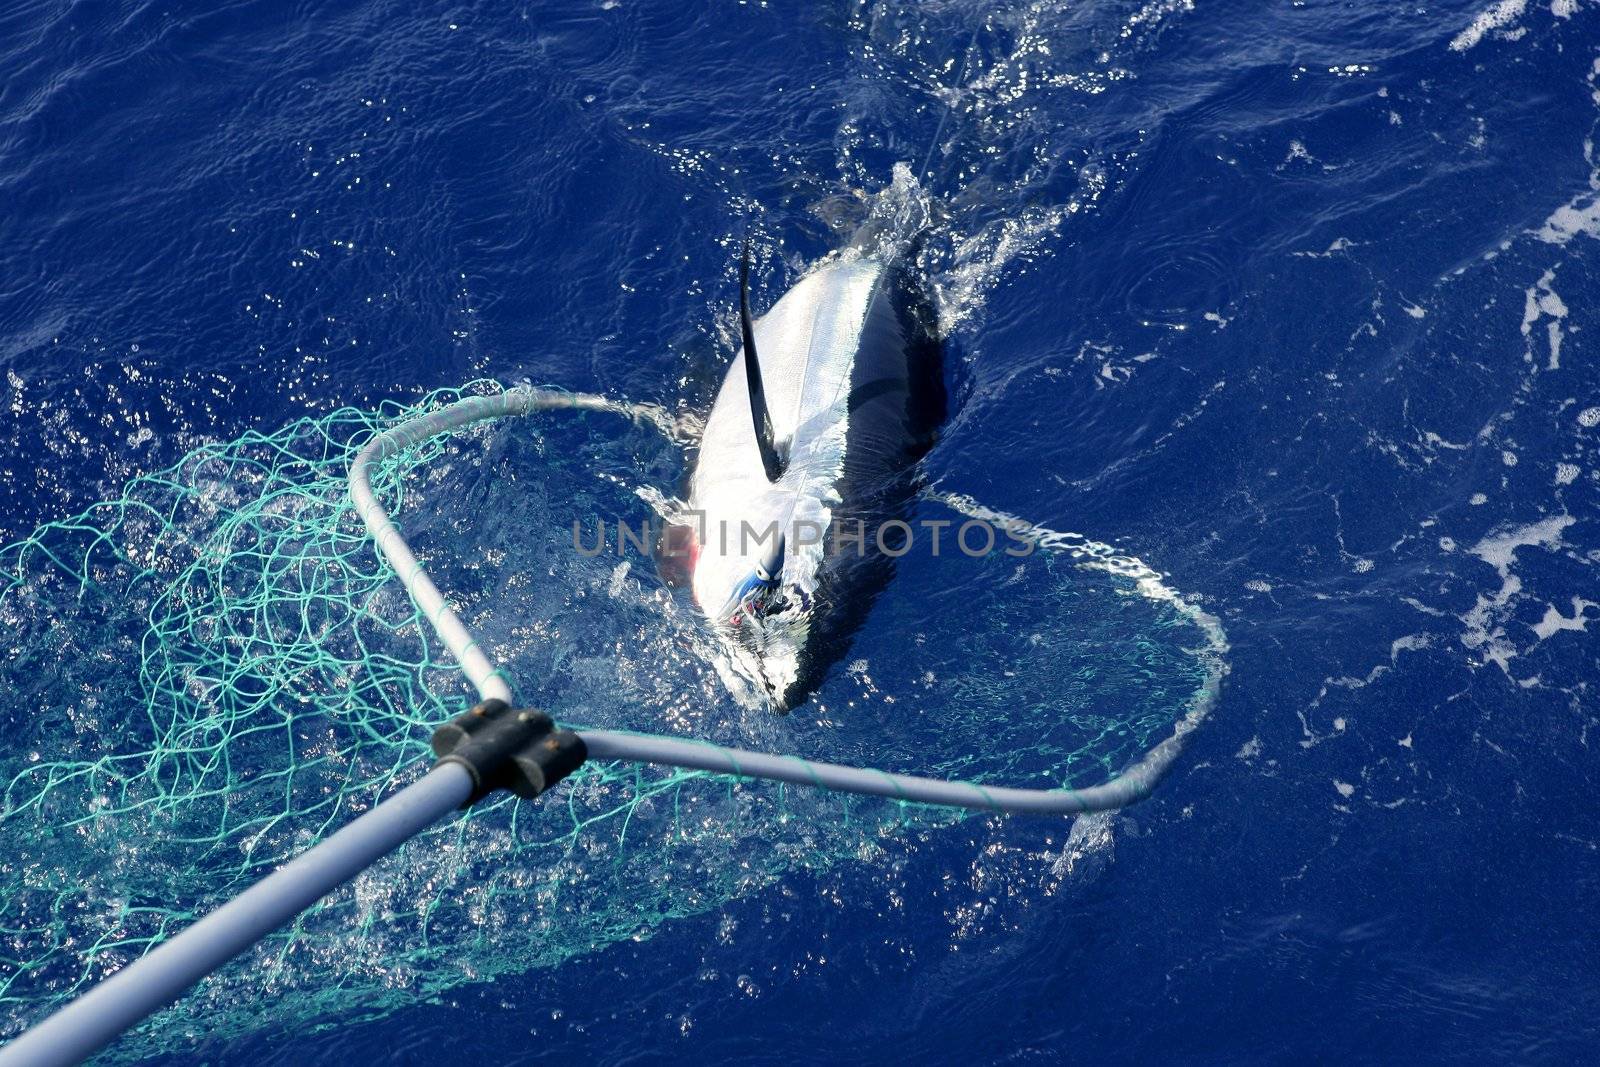 Blue fin tuna Mediterranean fishing and release by lunamarina